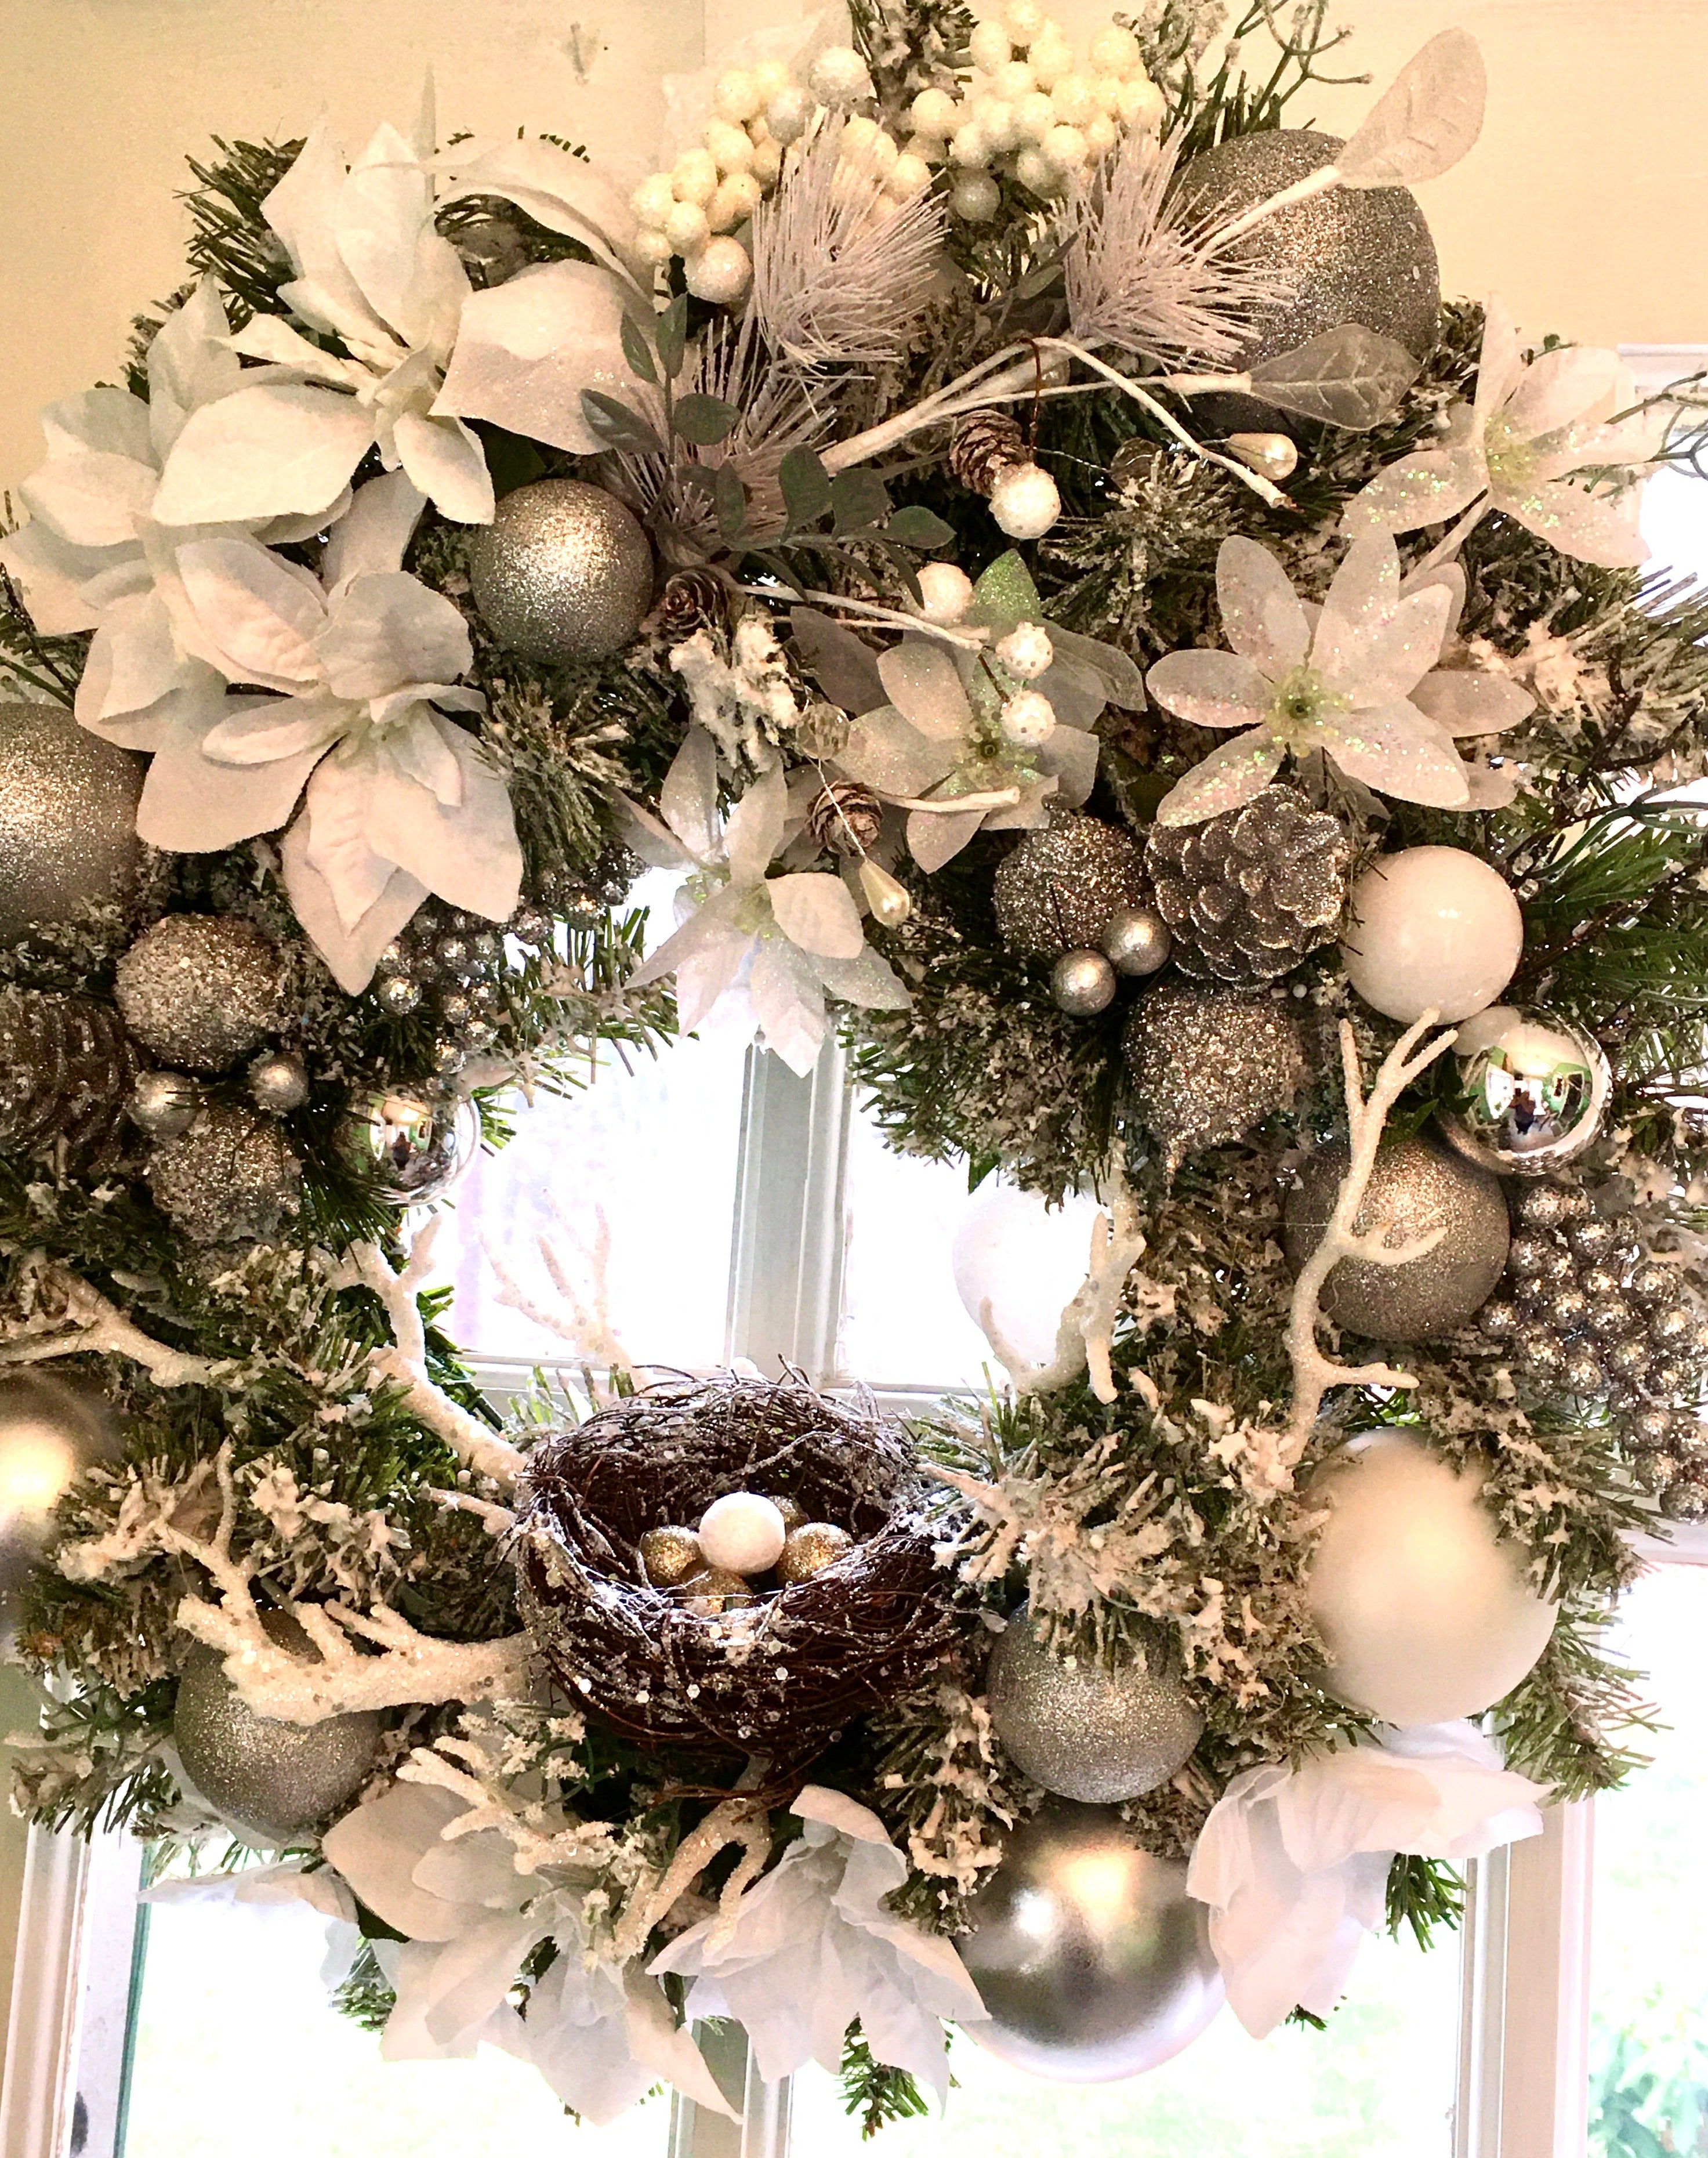 Nest-in Christmas Wreath 22"